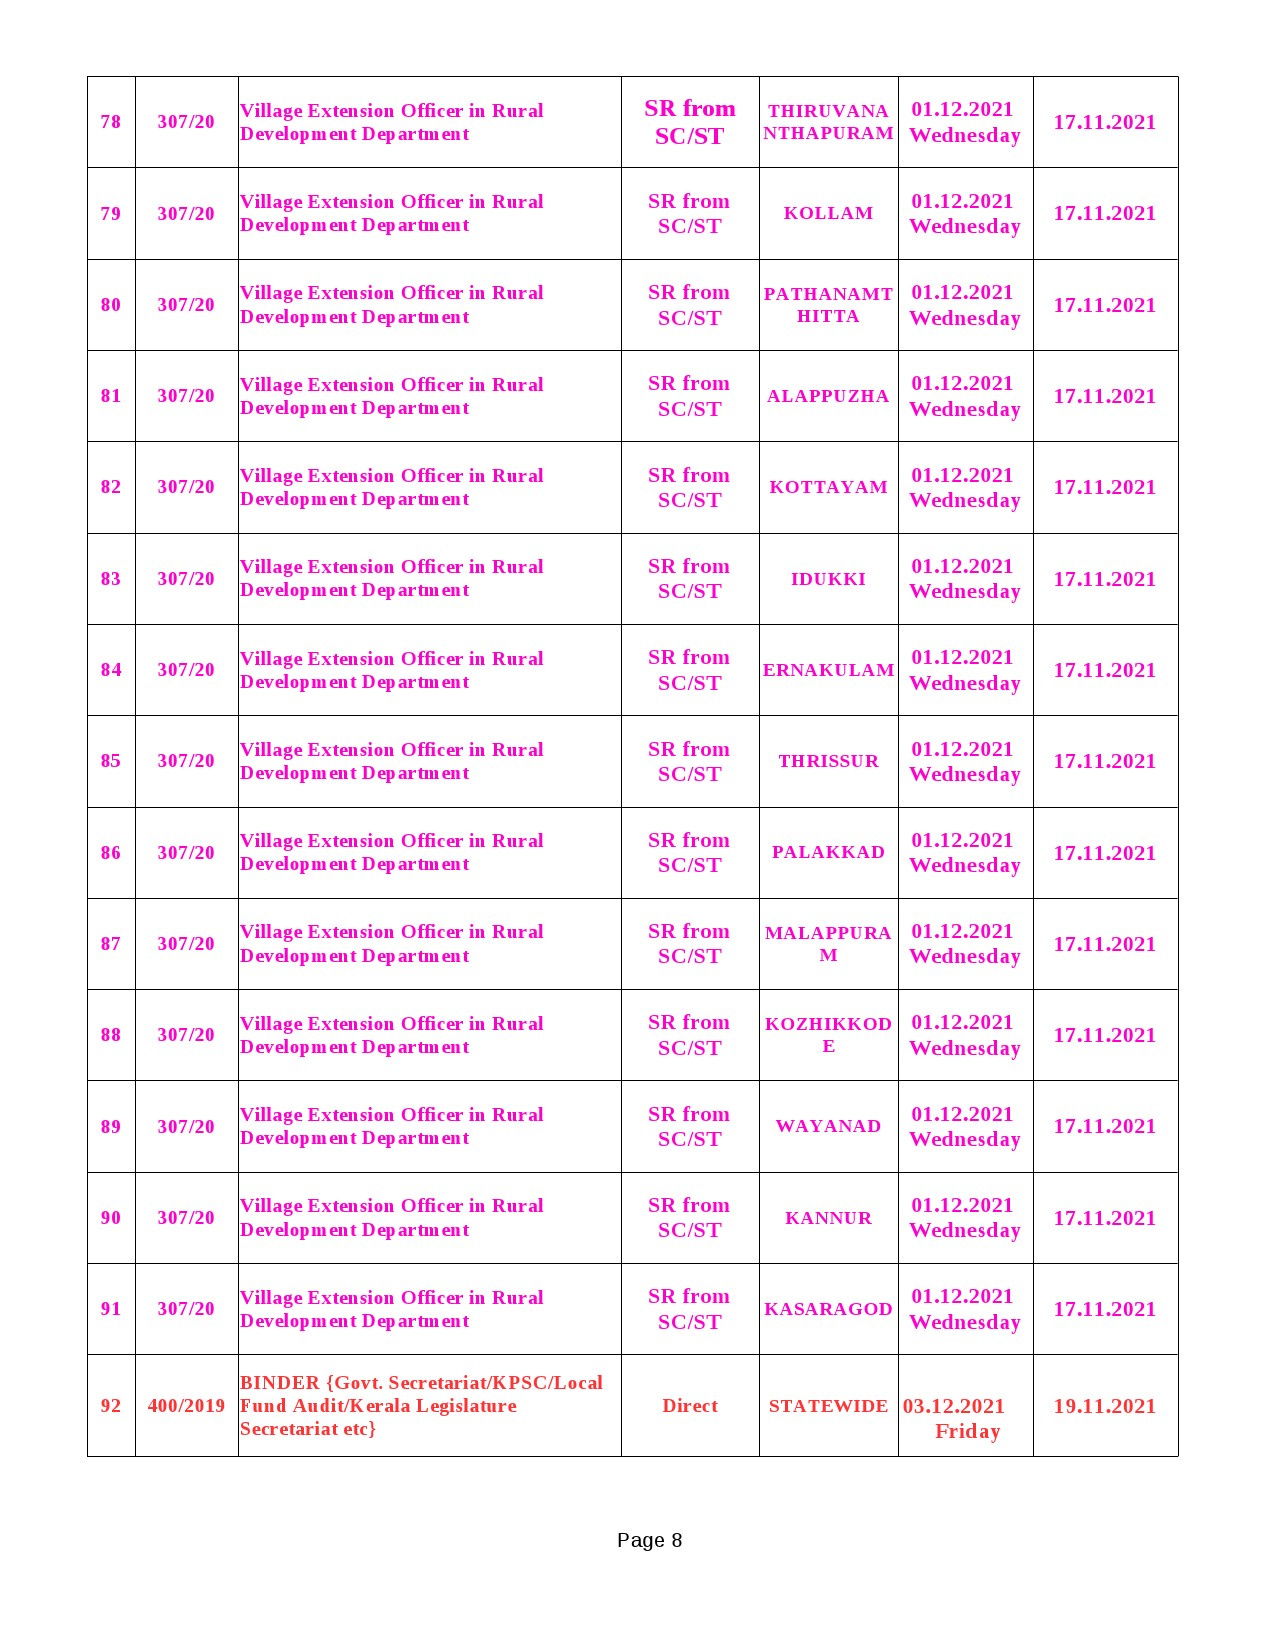 KPSC Programme For Main Examinations Of Upto SSLC Level Posts - Notification Image 8